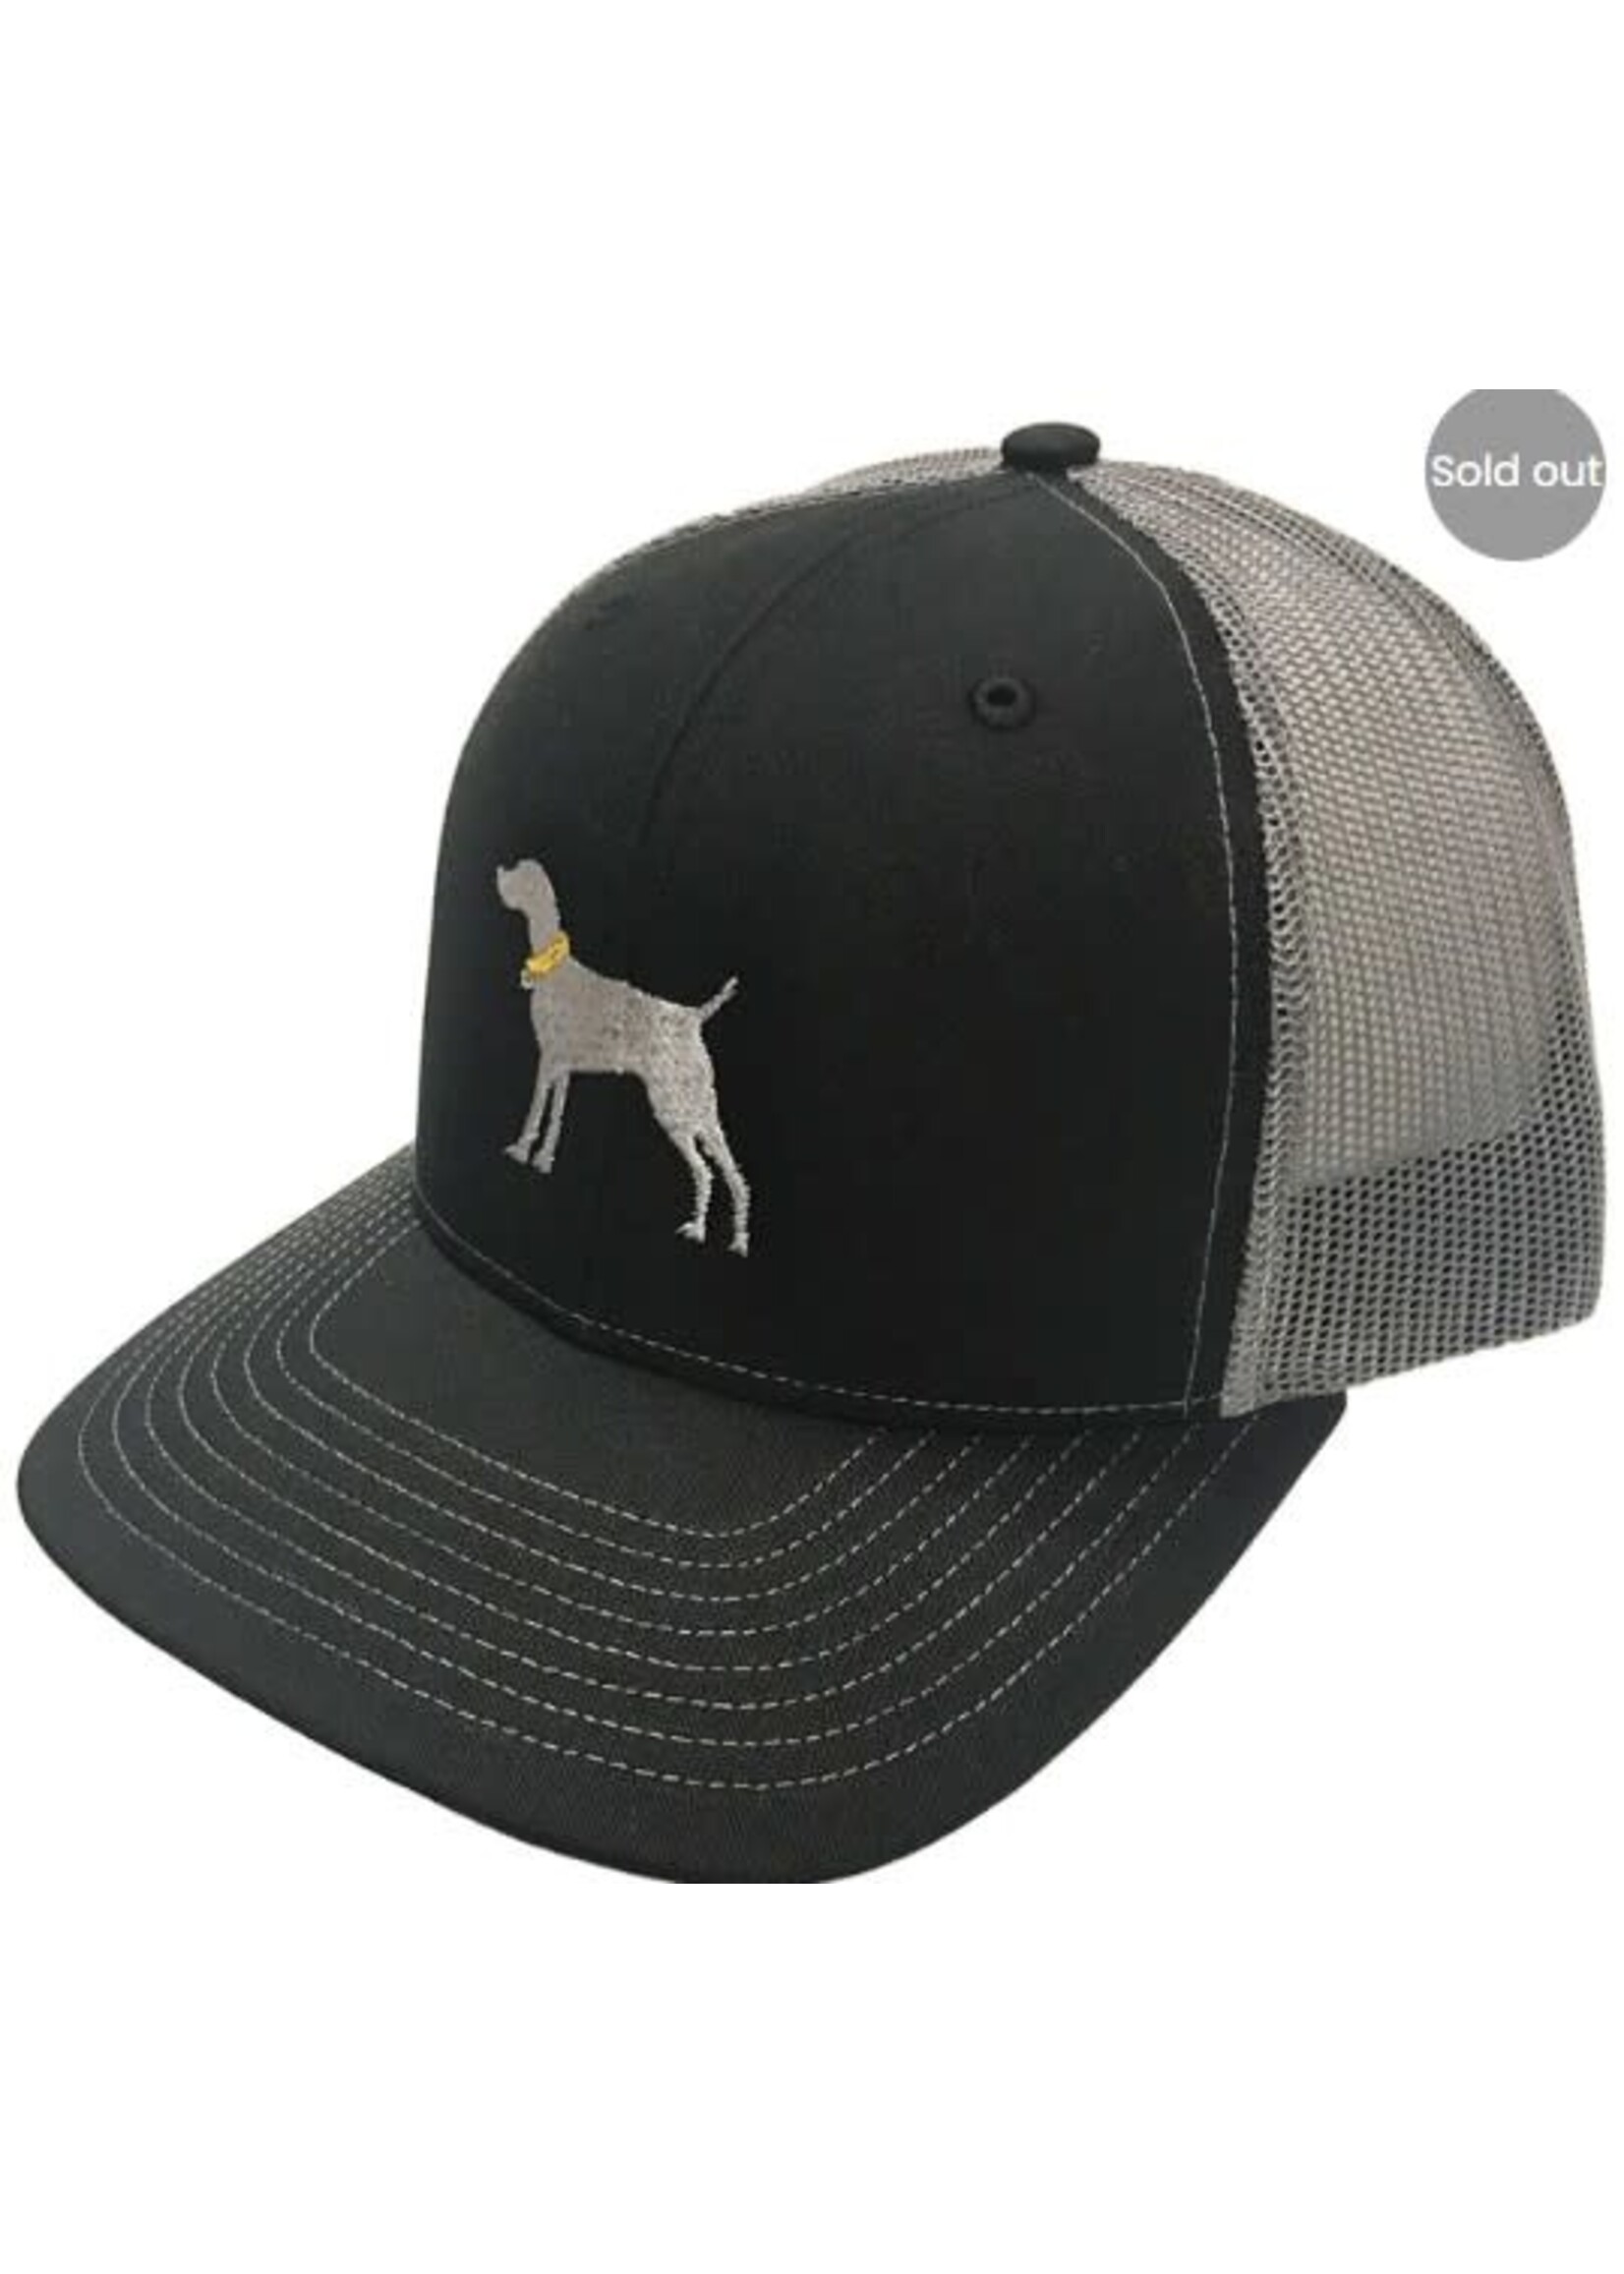 Straight Up Southern Dog Hat Black/Grey